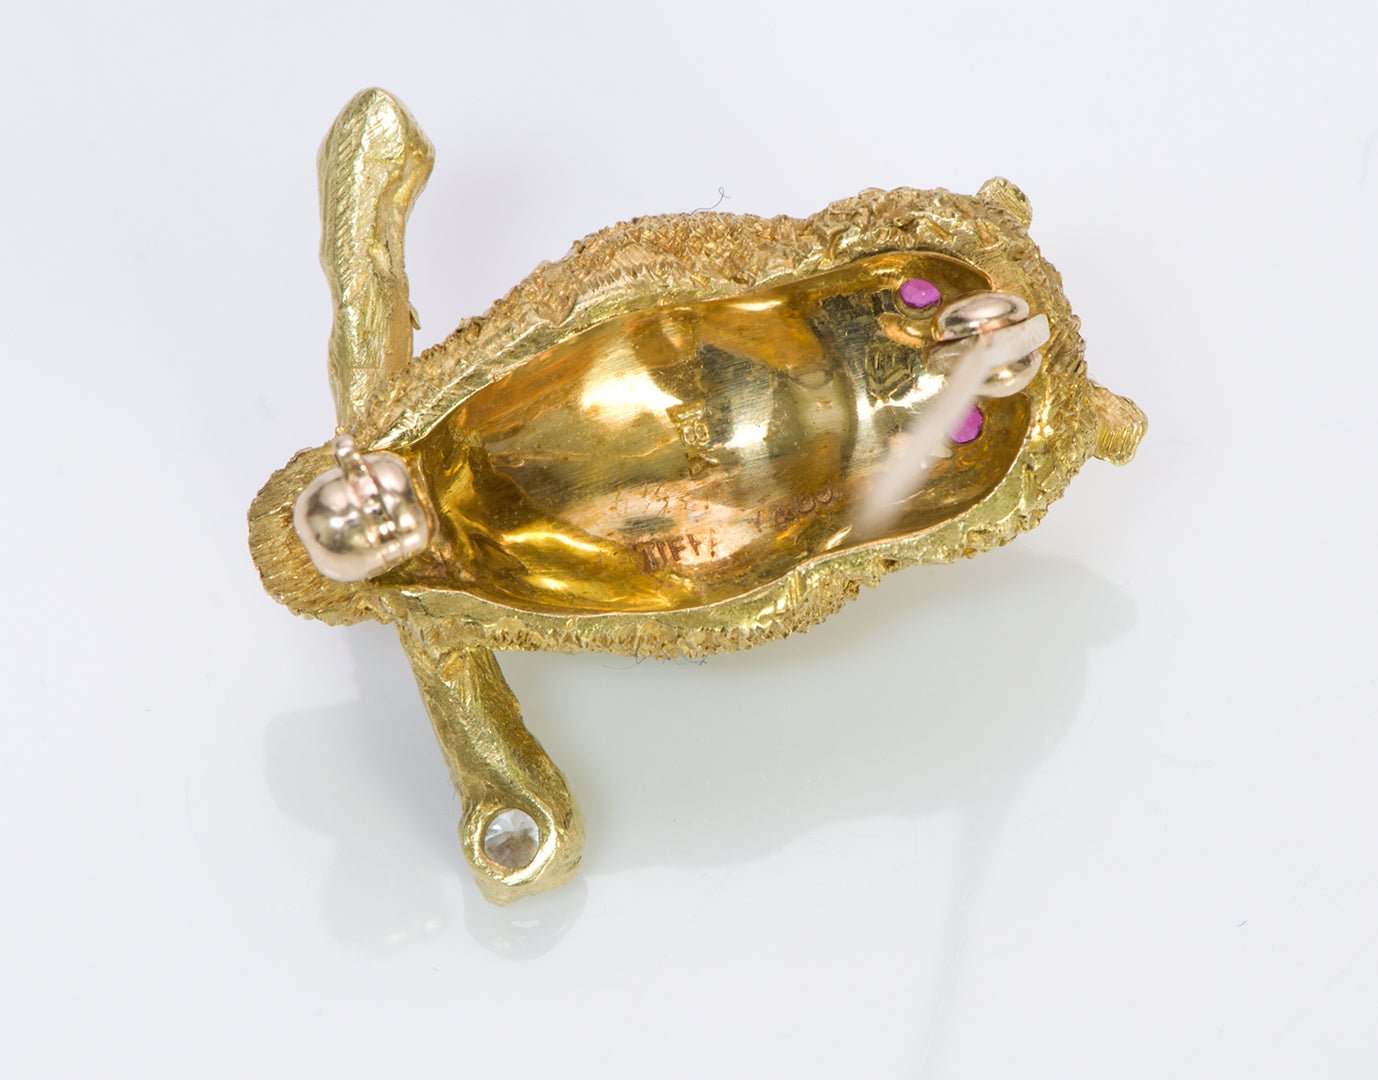 Tiffany & Co. 18K Gold Diamond Ruby Owl Brooch Pin